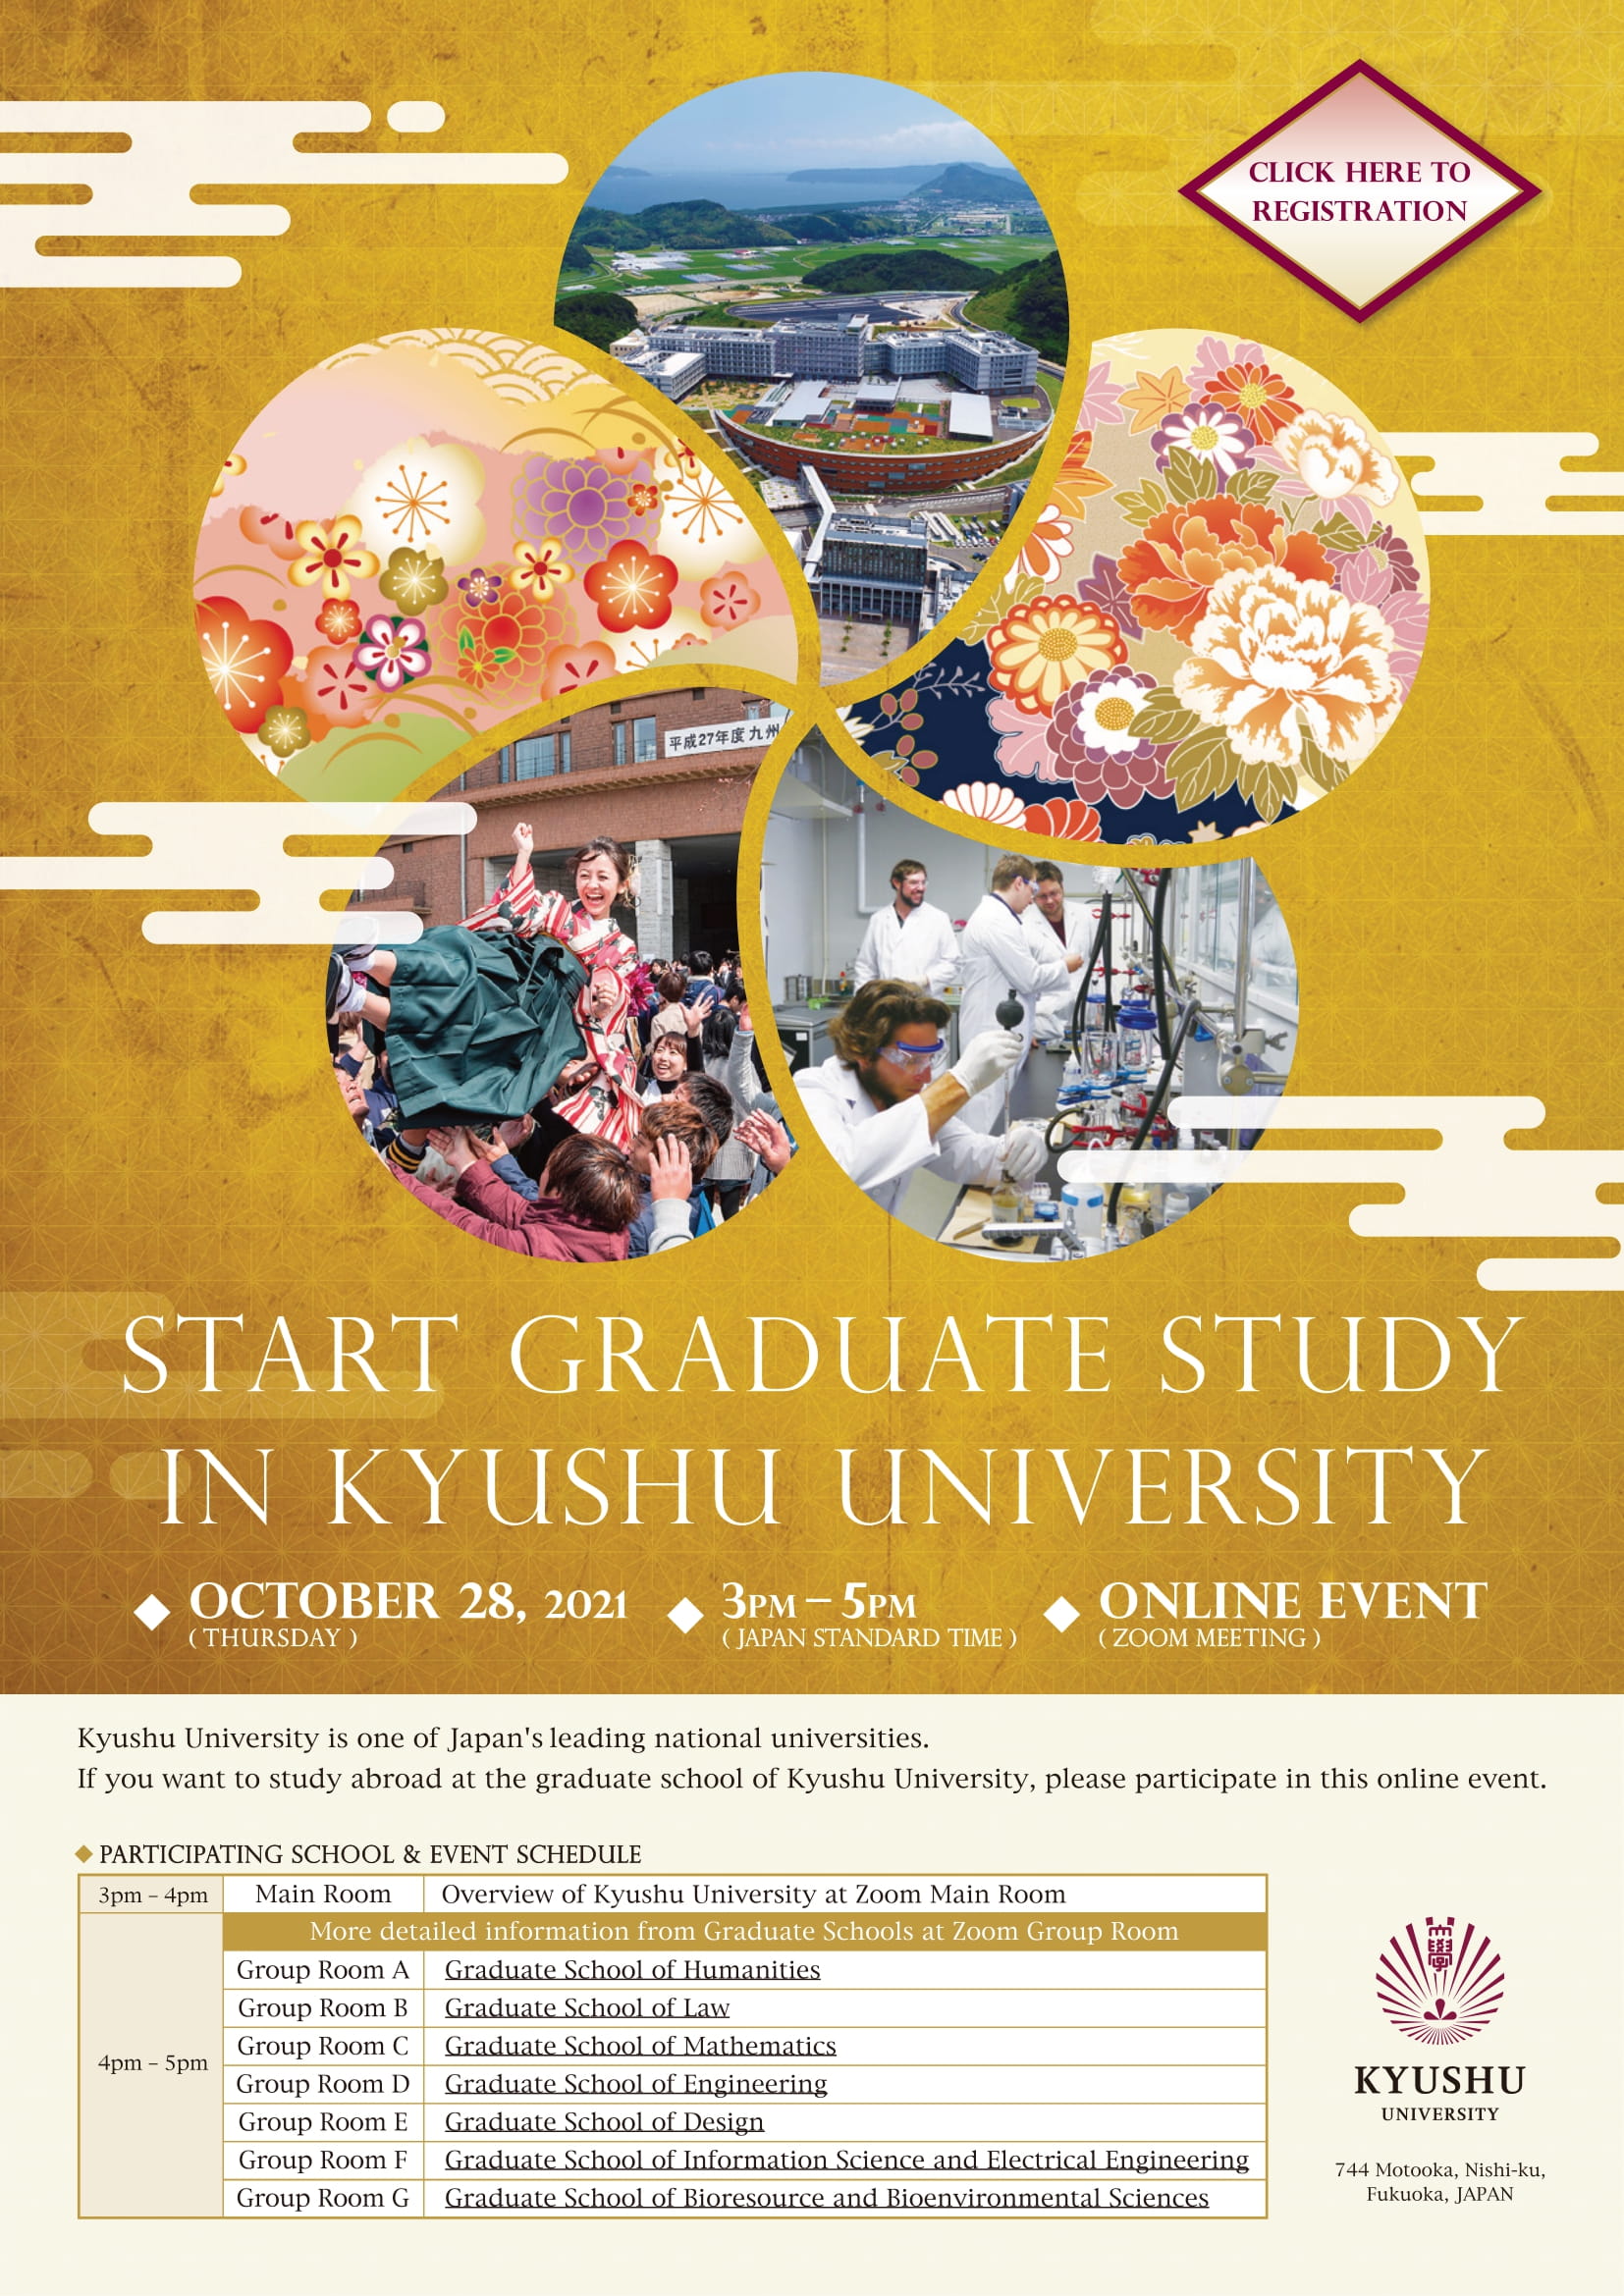 Oct 28, Kyushu University Online Graduate School Information Session